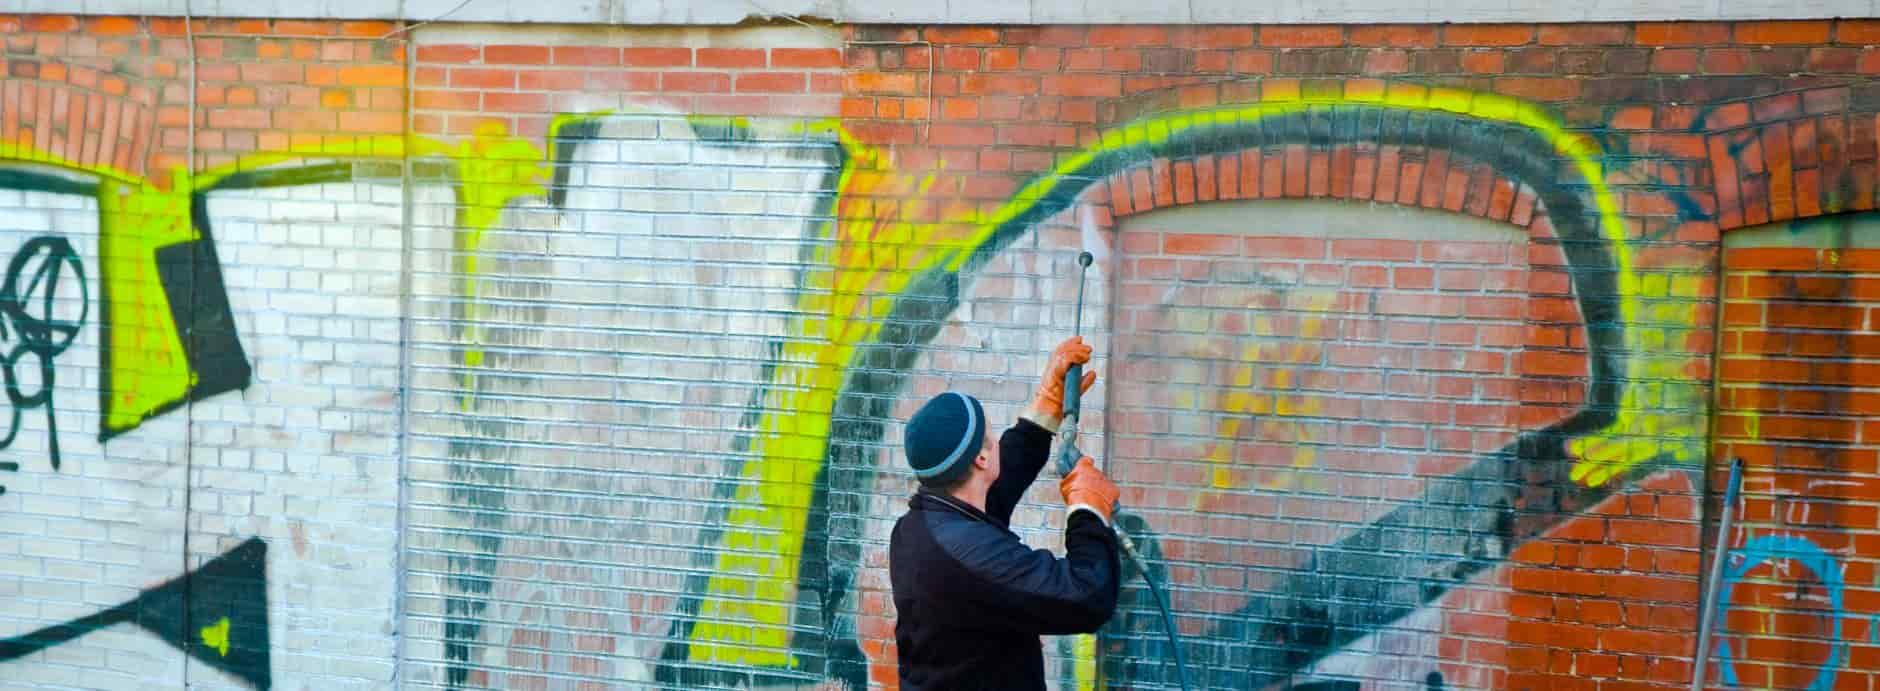 Graffiti Removal in Peterlee